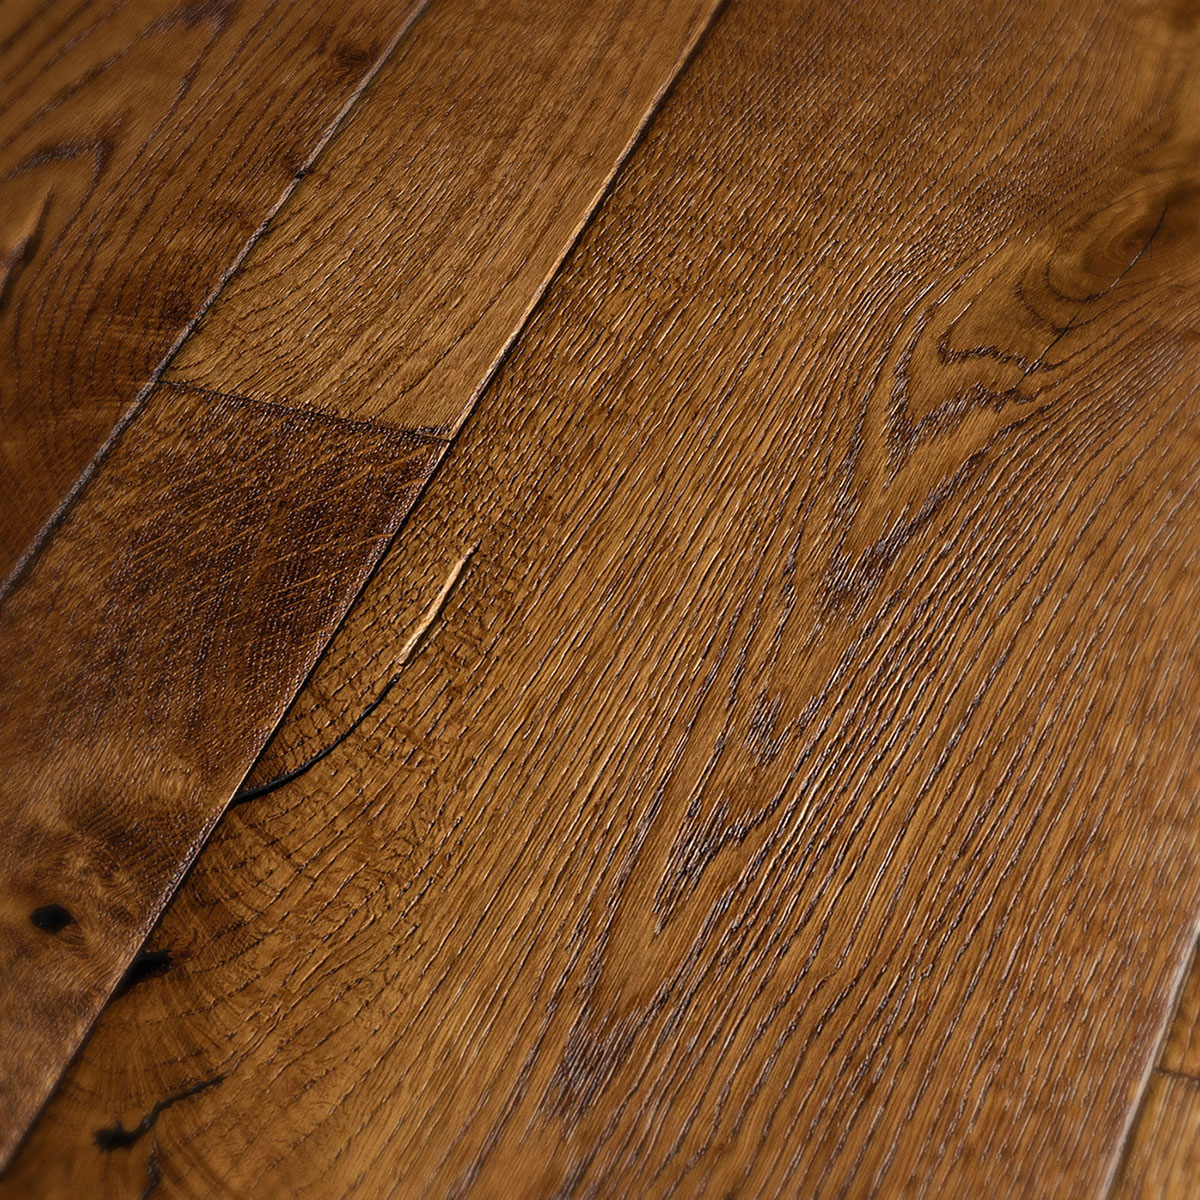 Kingswood - Brushed, Distressed Mixed Width Oak Floor